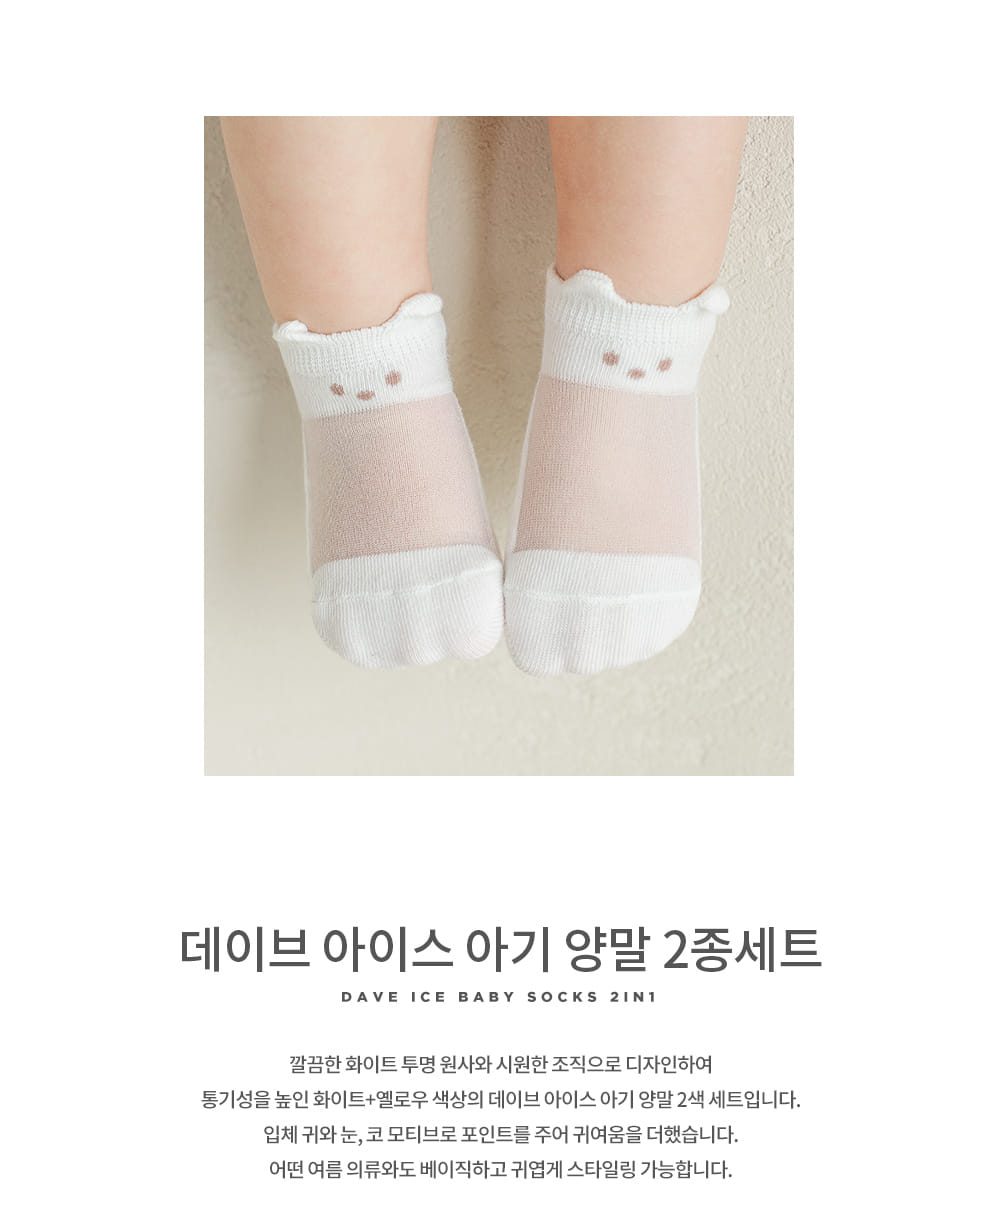 Kids Clara - Korean Baby Fashion - #babyclothing - Dave Ice Baby Socks 2 Color Set (5ea 1 set) - 2